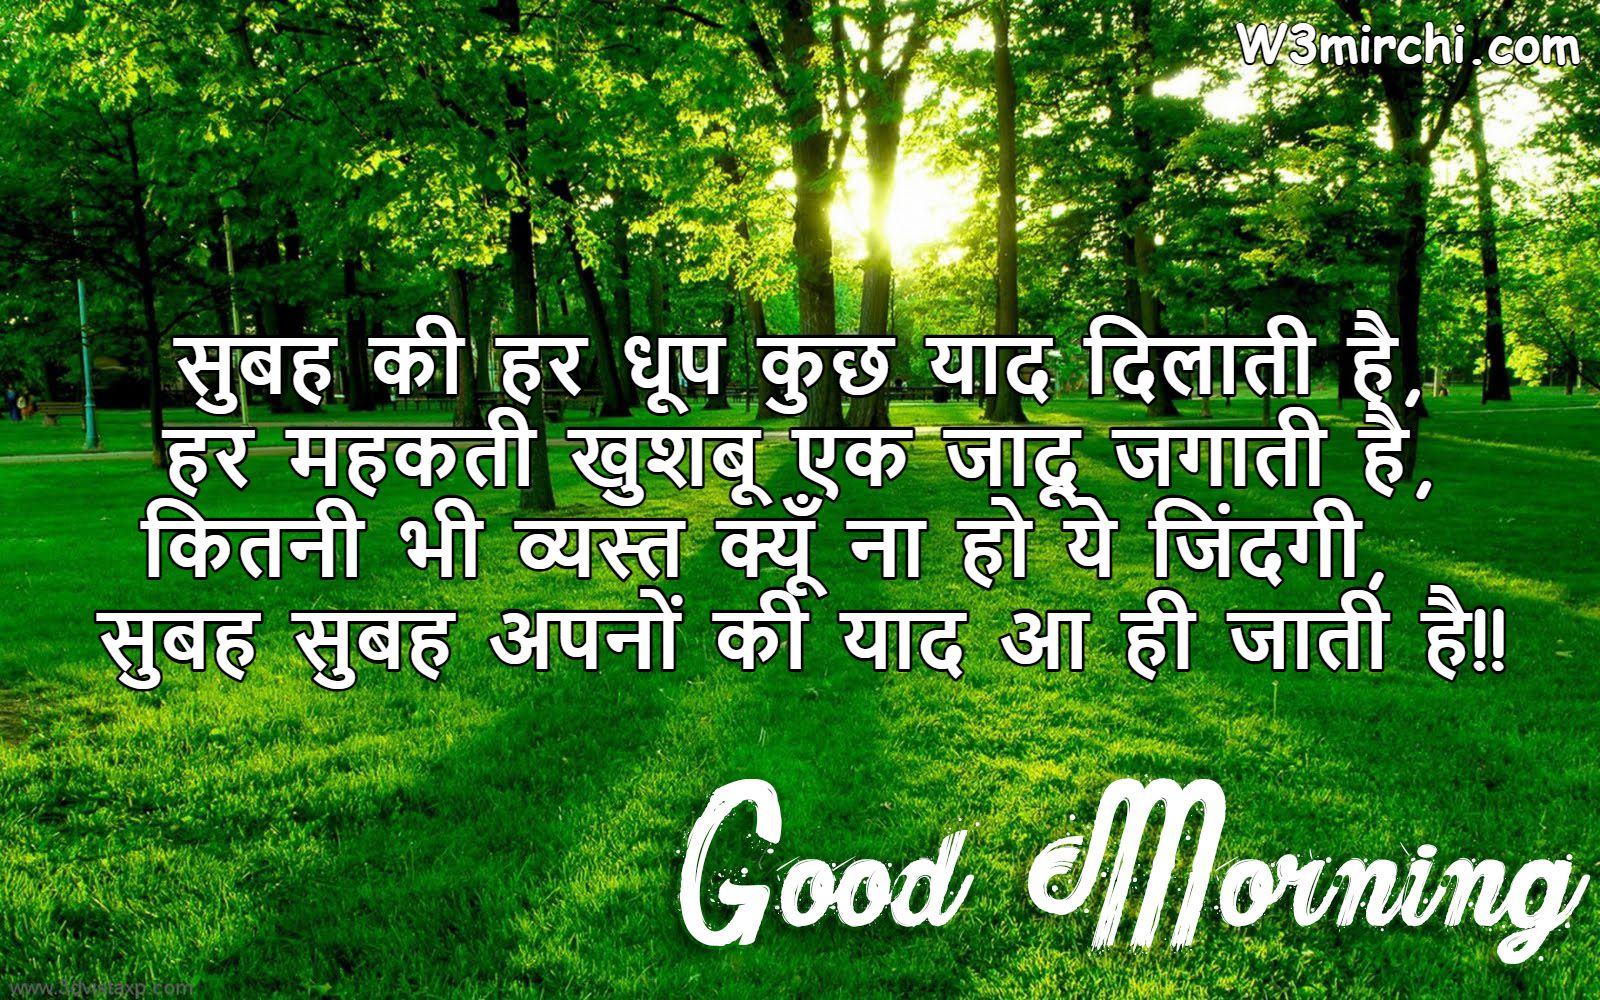 Good Morning in Hindi